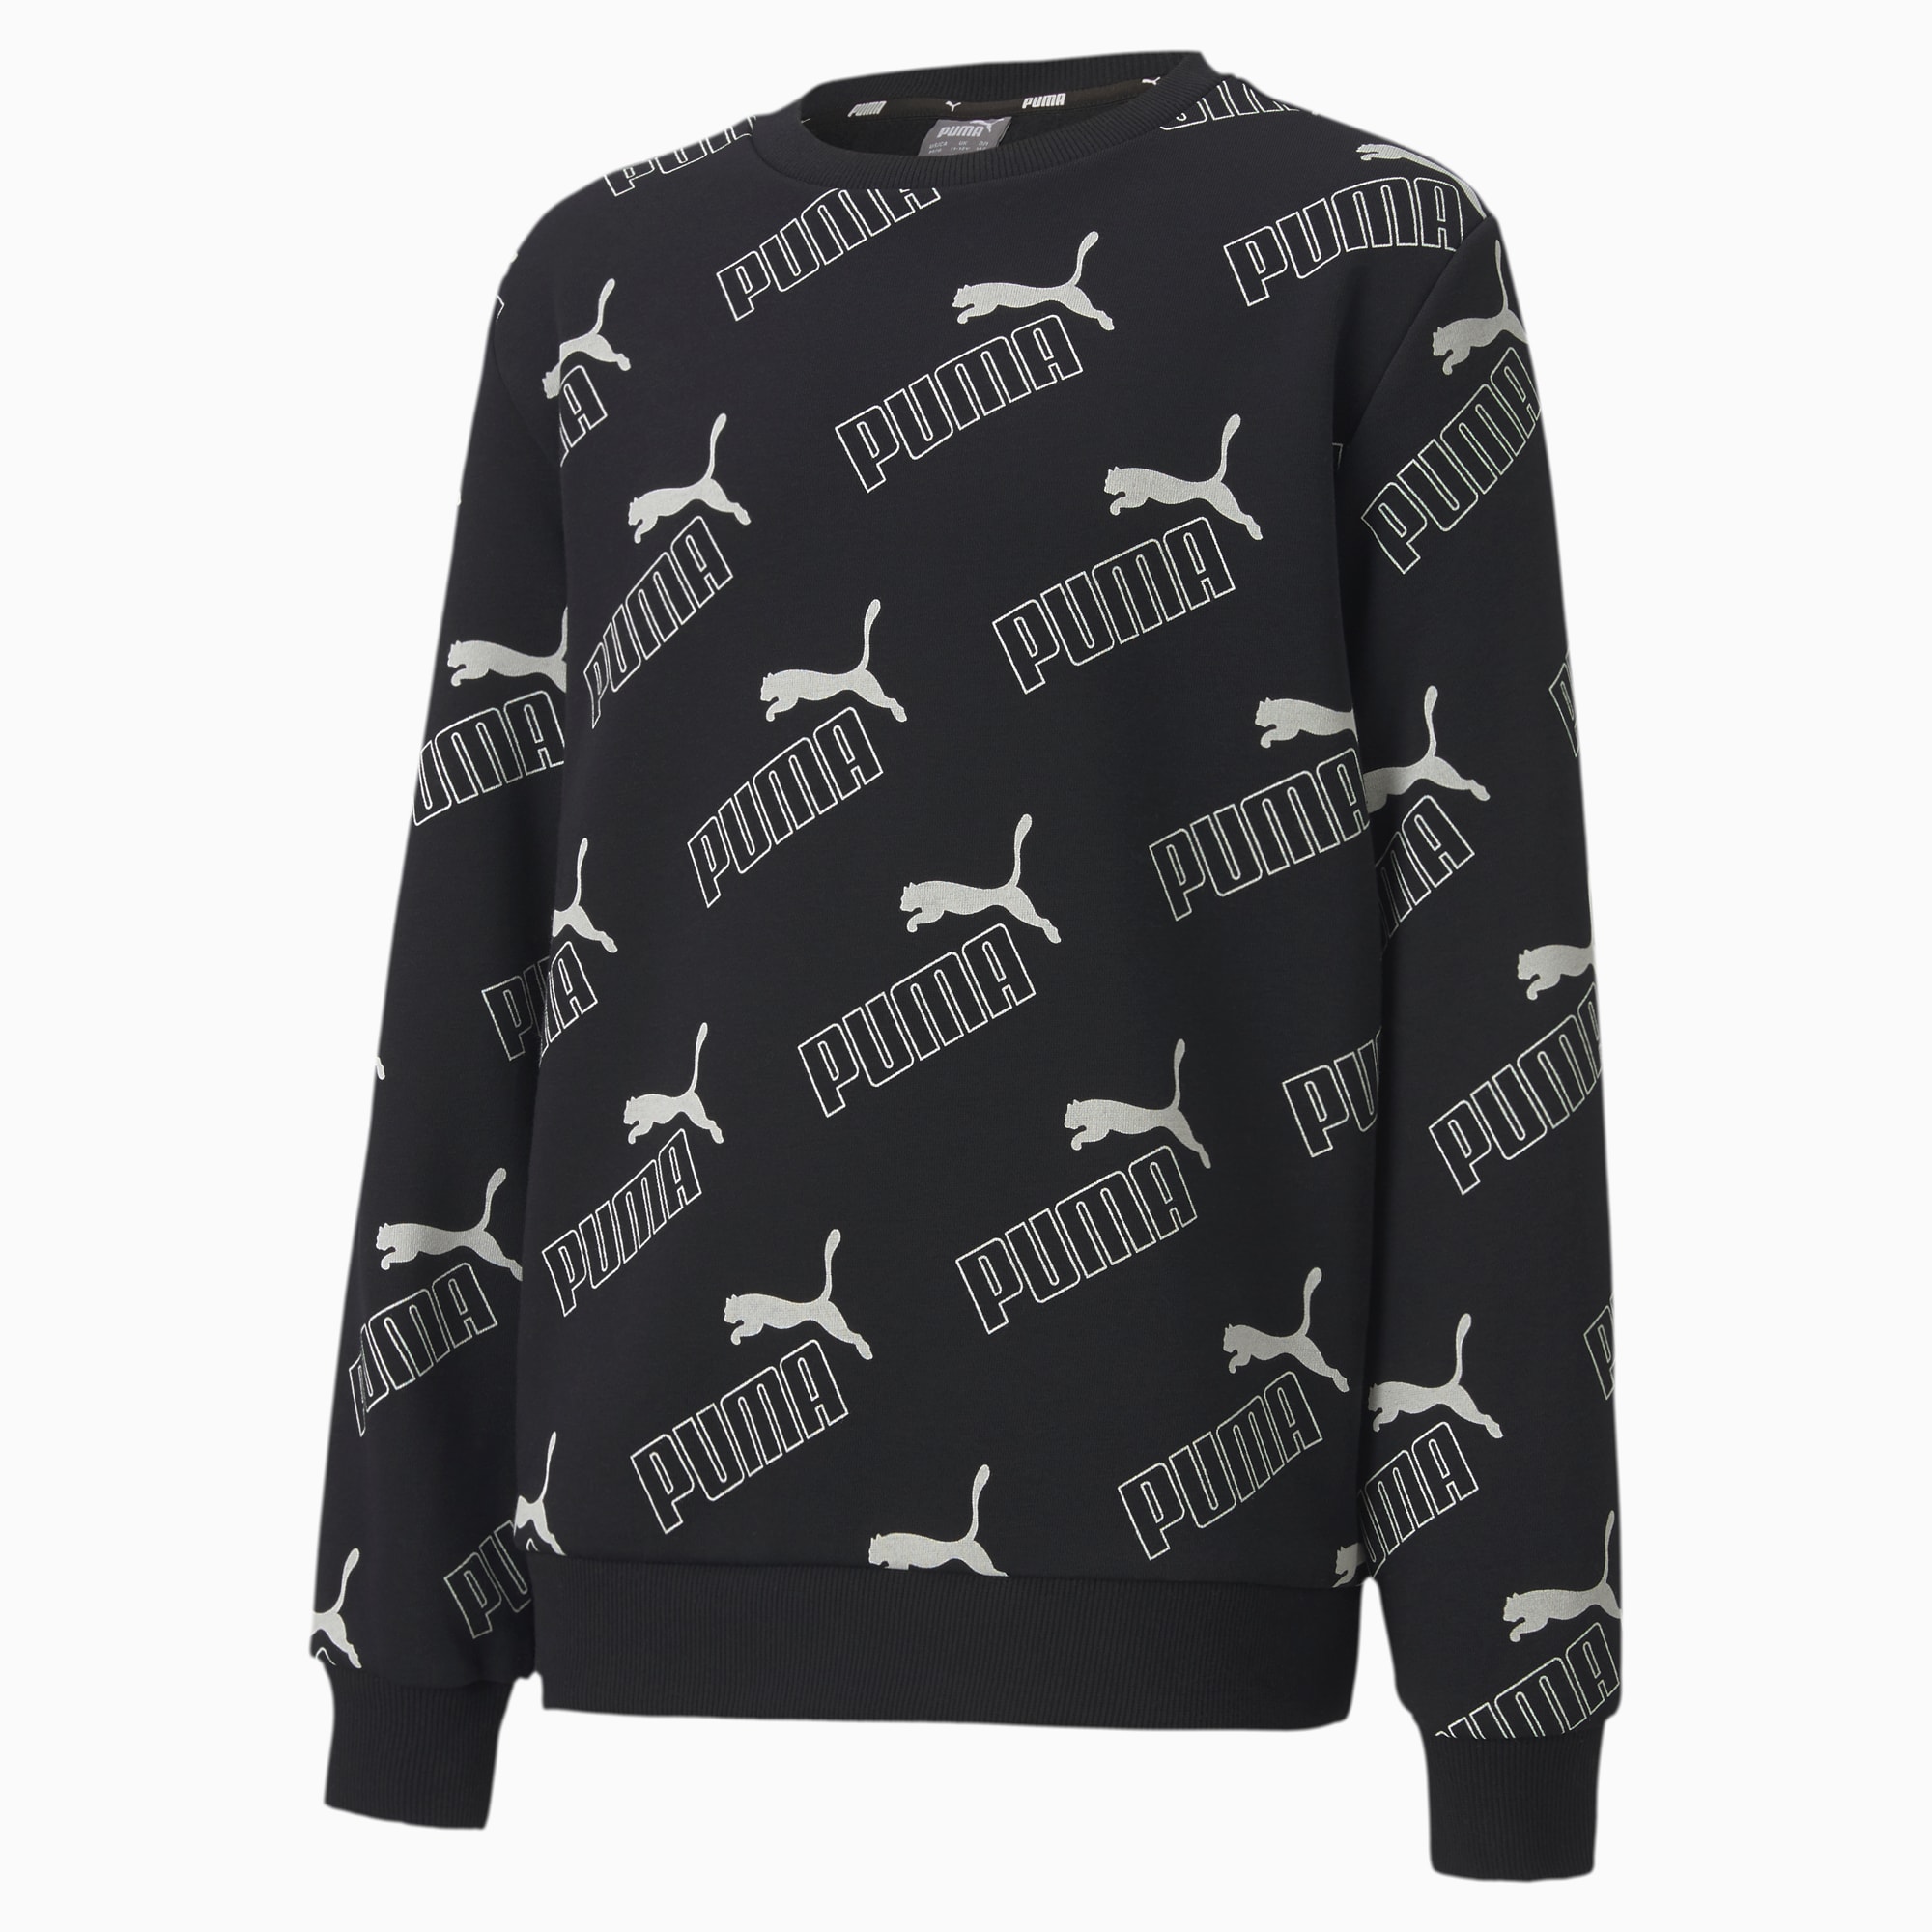 puma black and white sweater